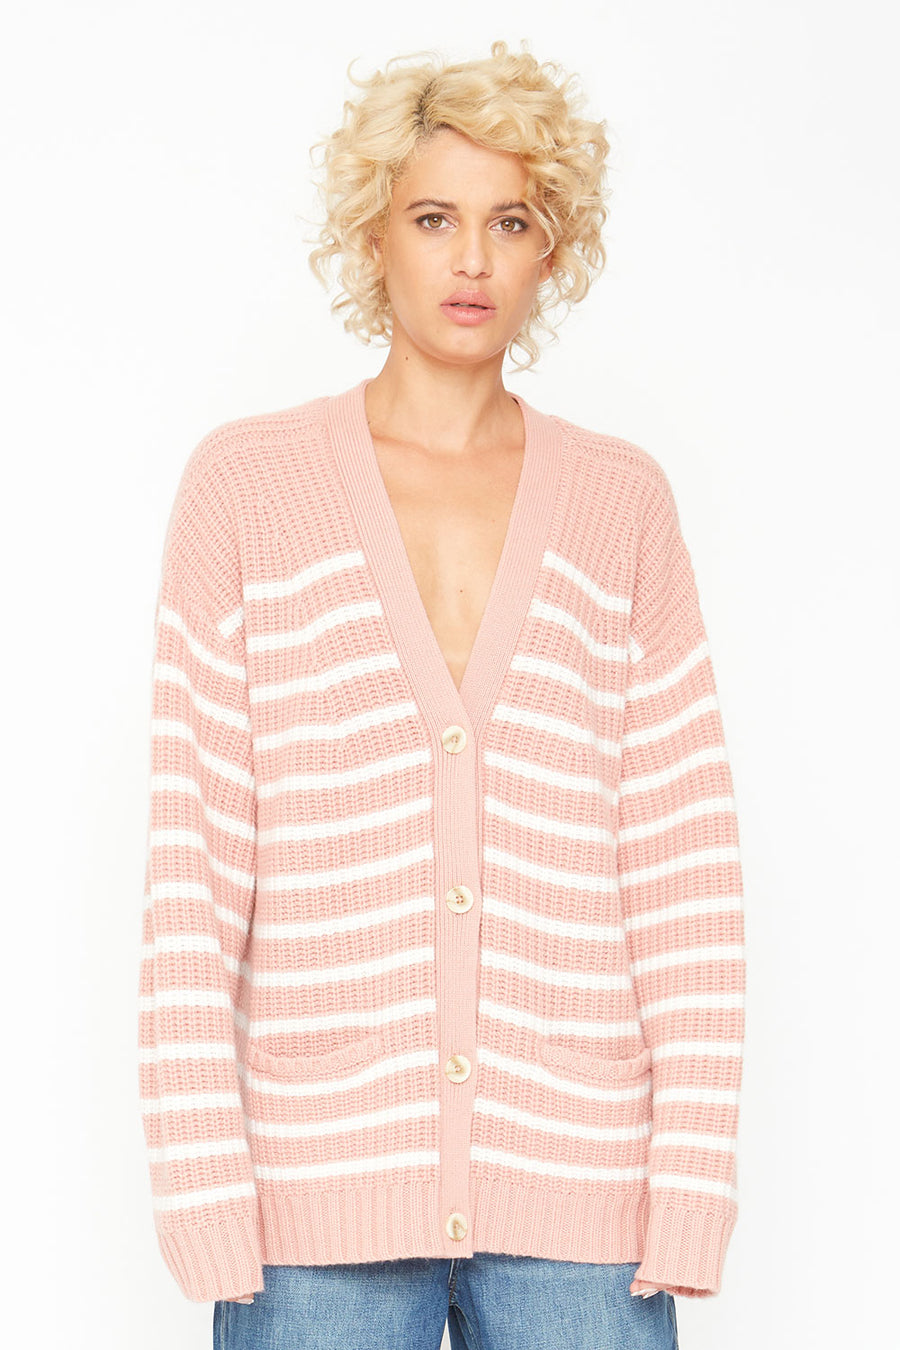 Grandpa Cardigan Sweater - Pink and White Stripe WOMENS chaserbrand